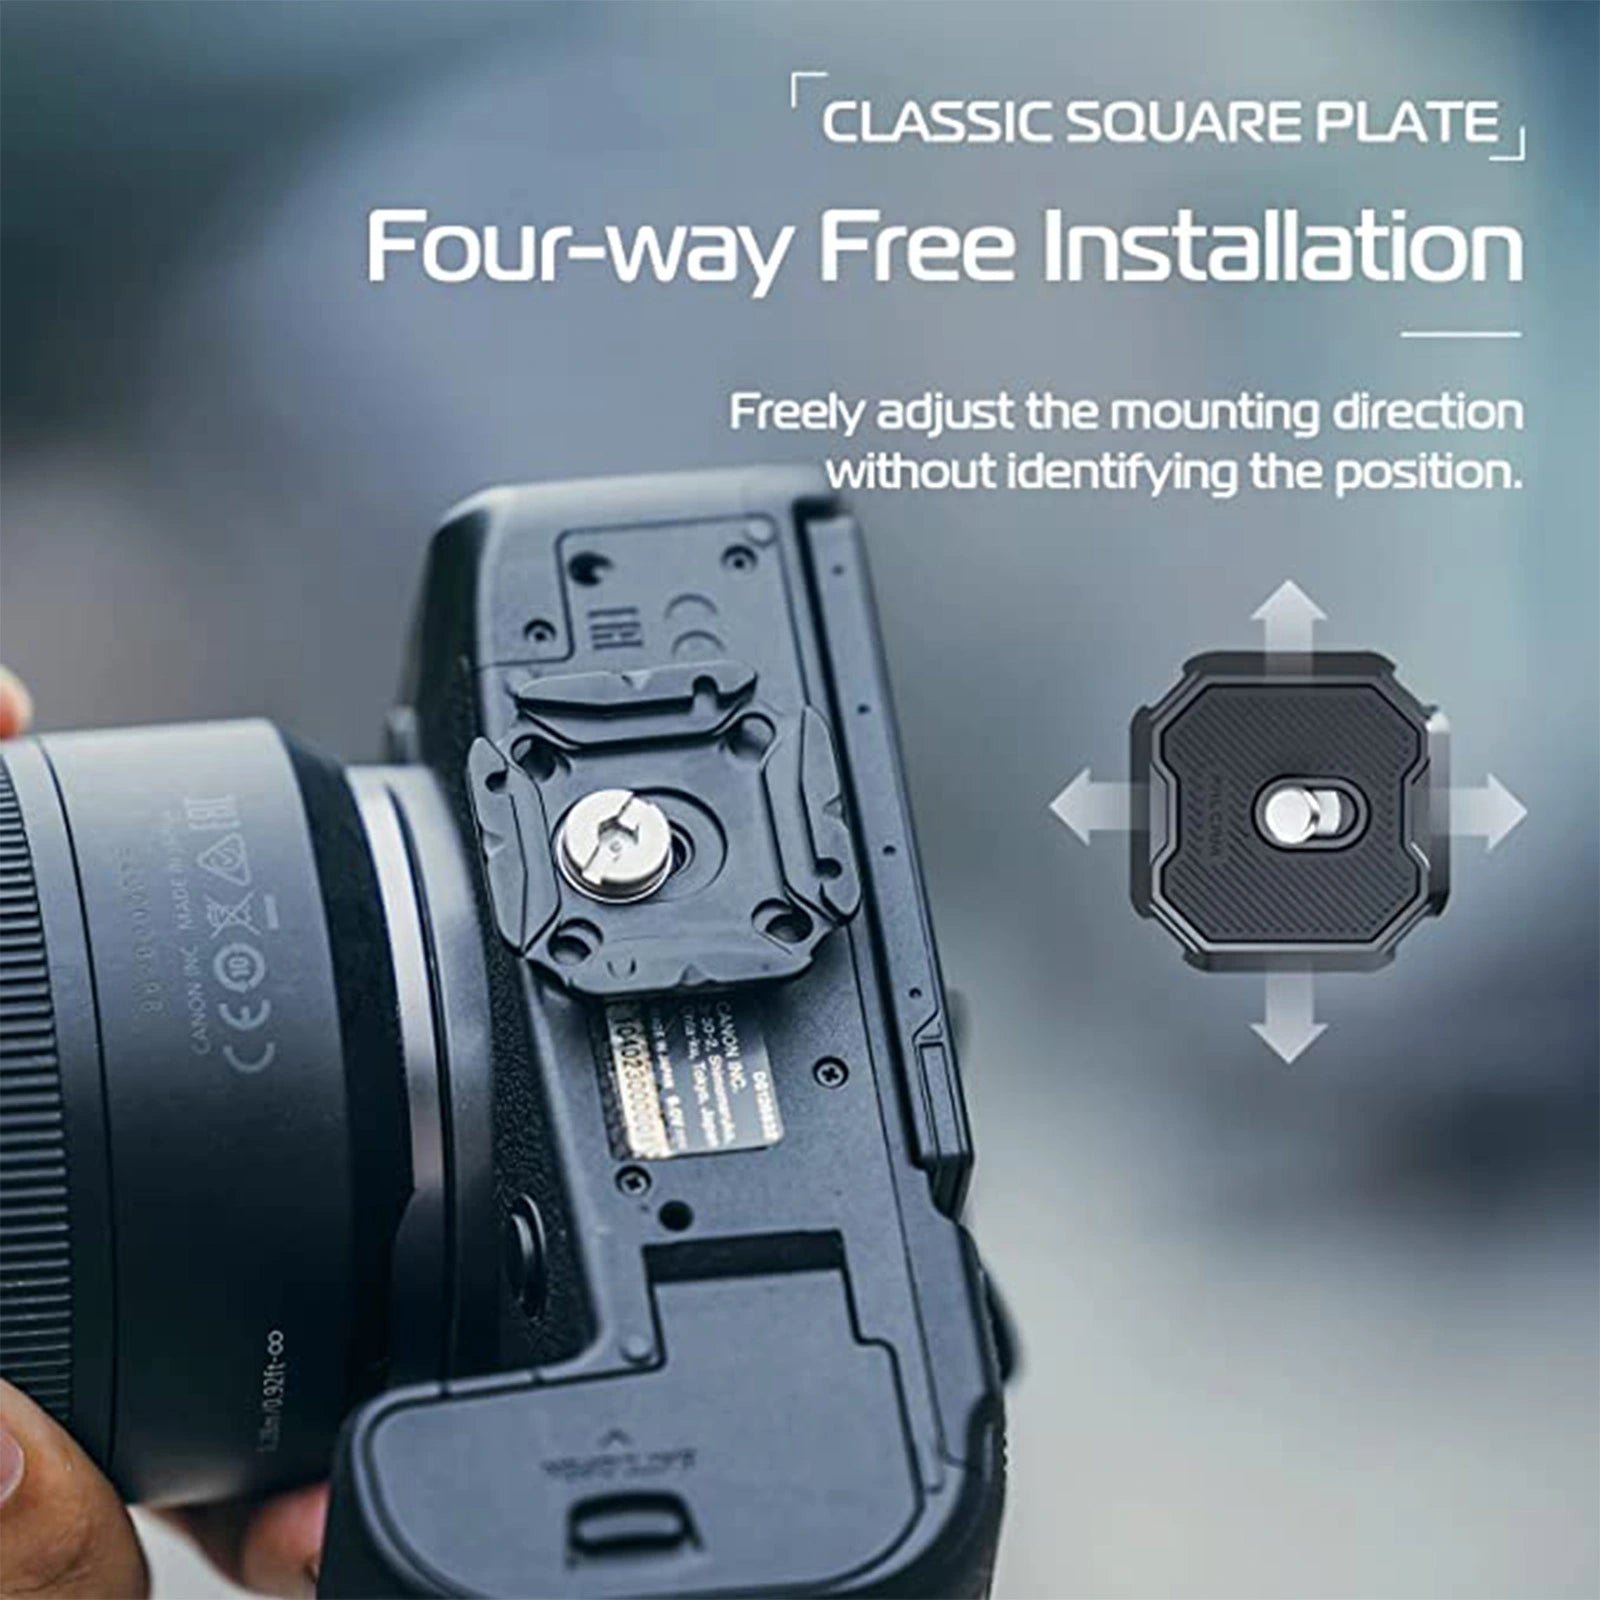 Ulanzi Falcam F38 Quick Release Kit for Camera Backpack Strap Clip V2